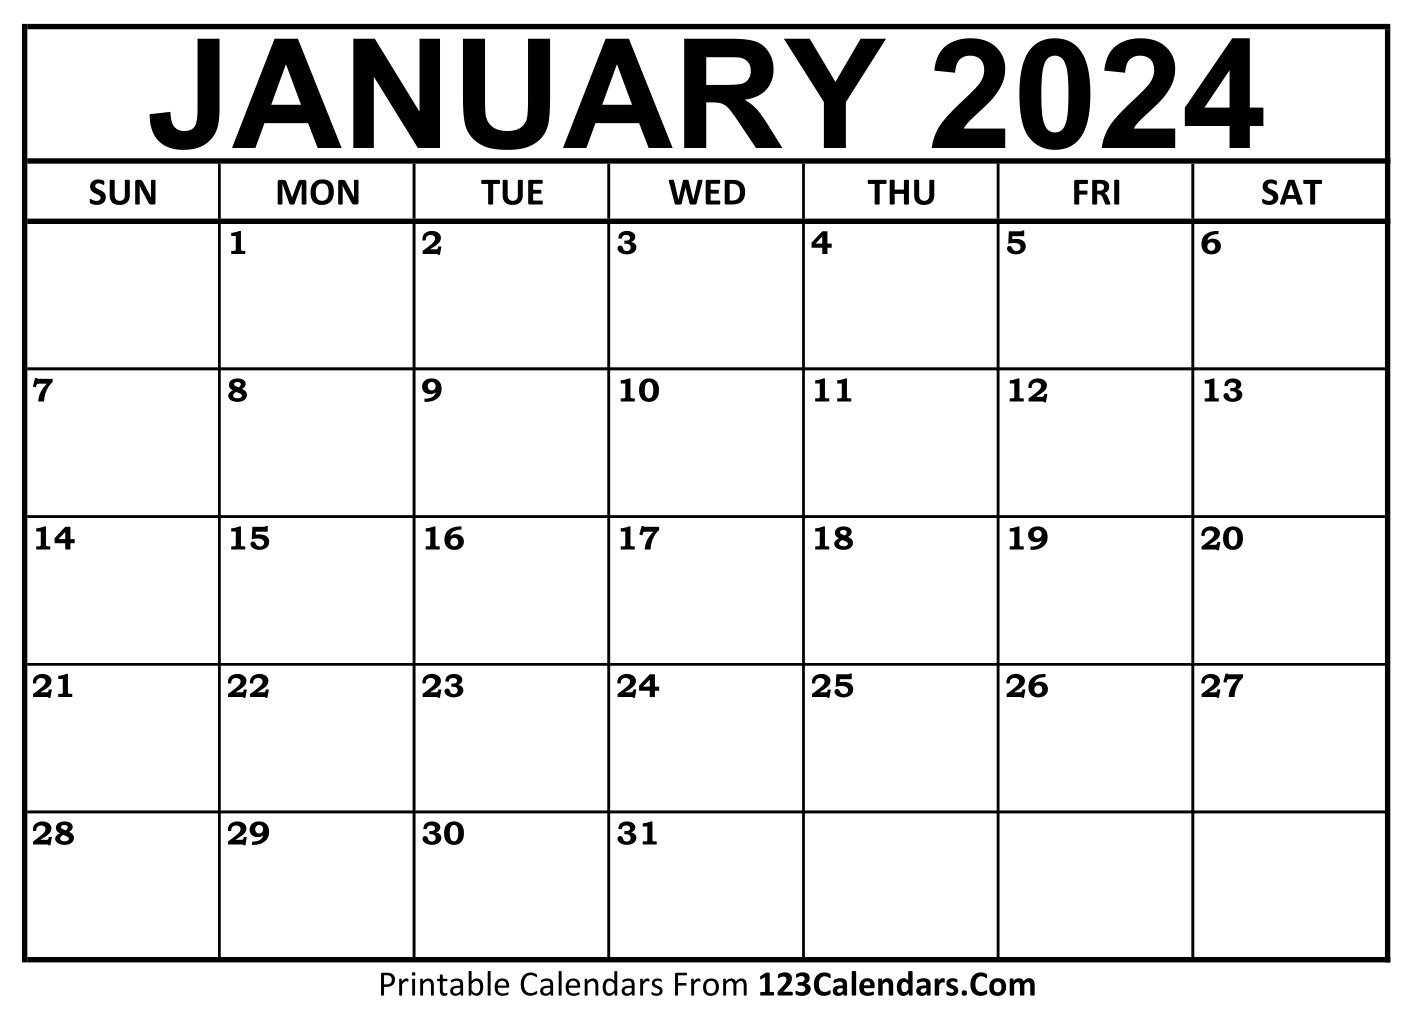 Printable January 2024 Calendar Templates - 123Calendars | January Free Printable Calendar 2024